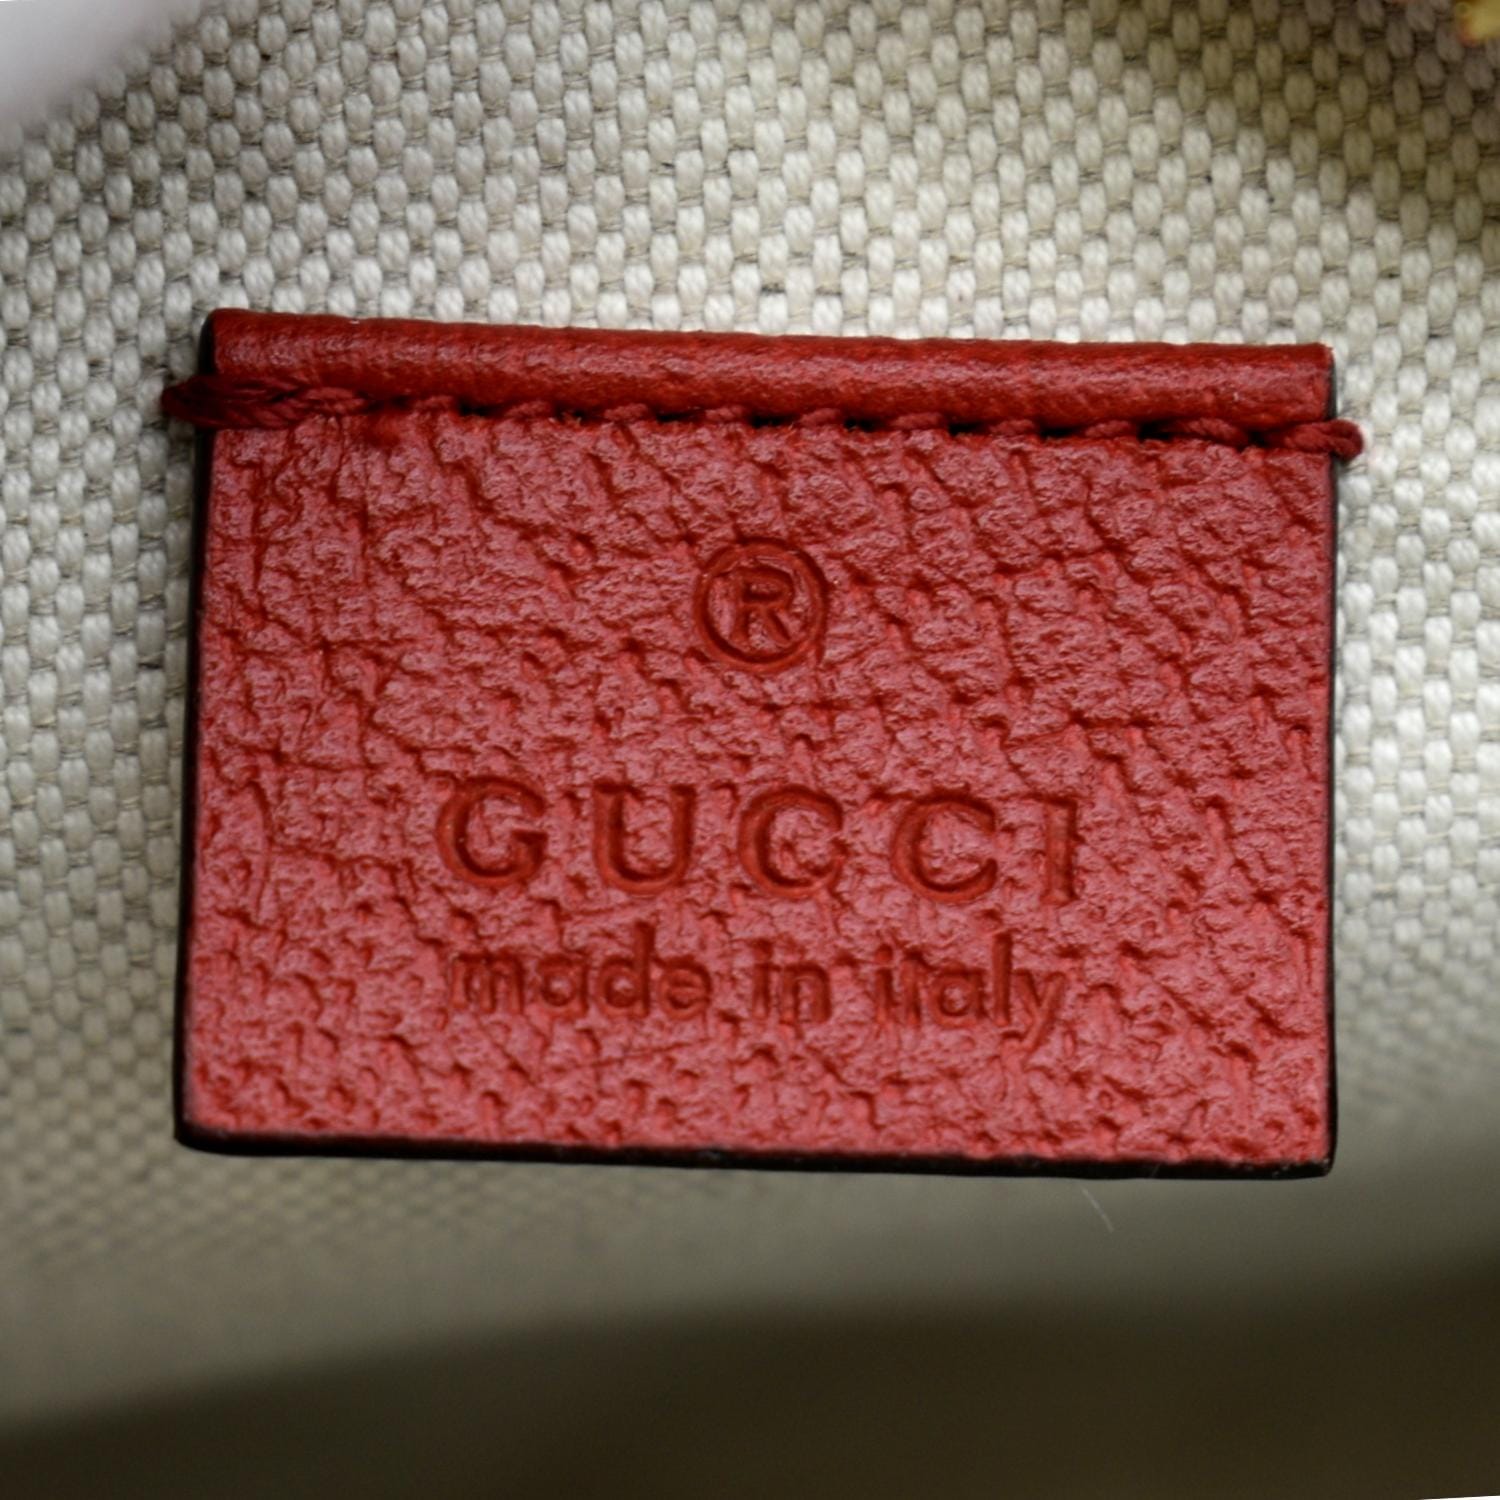 Gucci Ophidia Apple Round GG Supreme Monogram Crossbody Bag